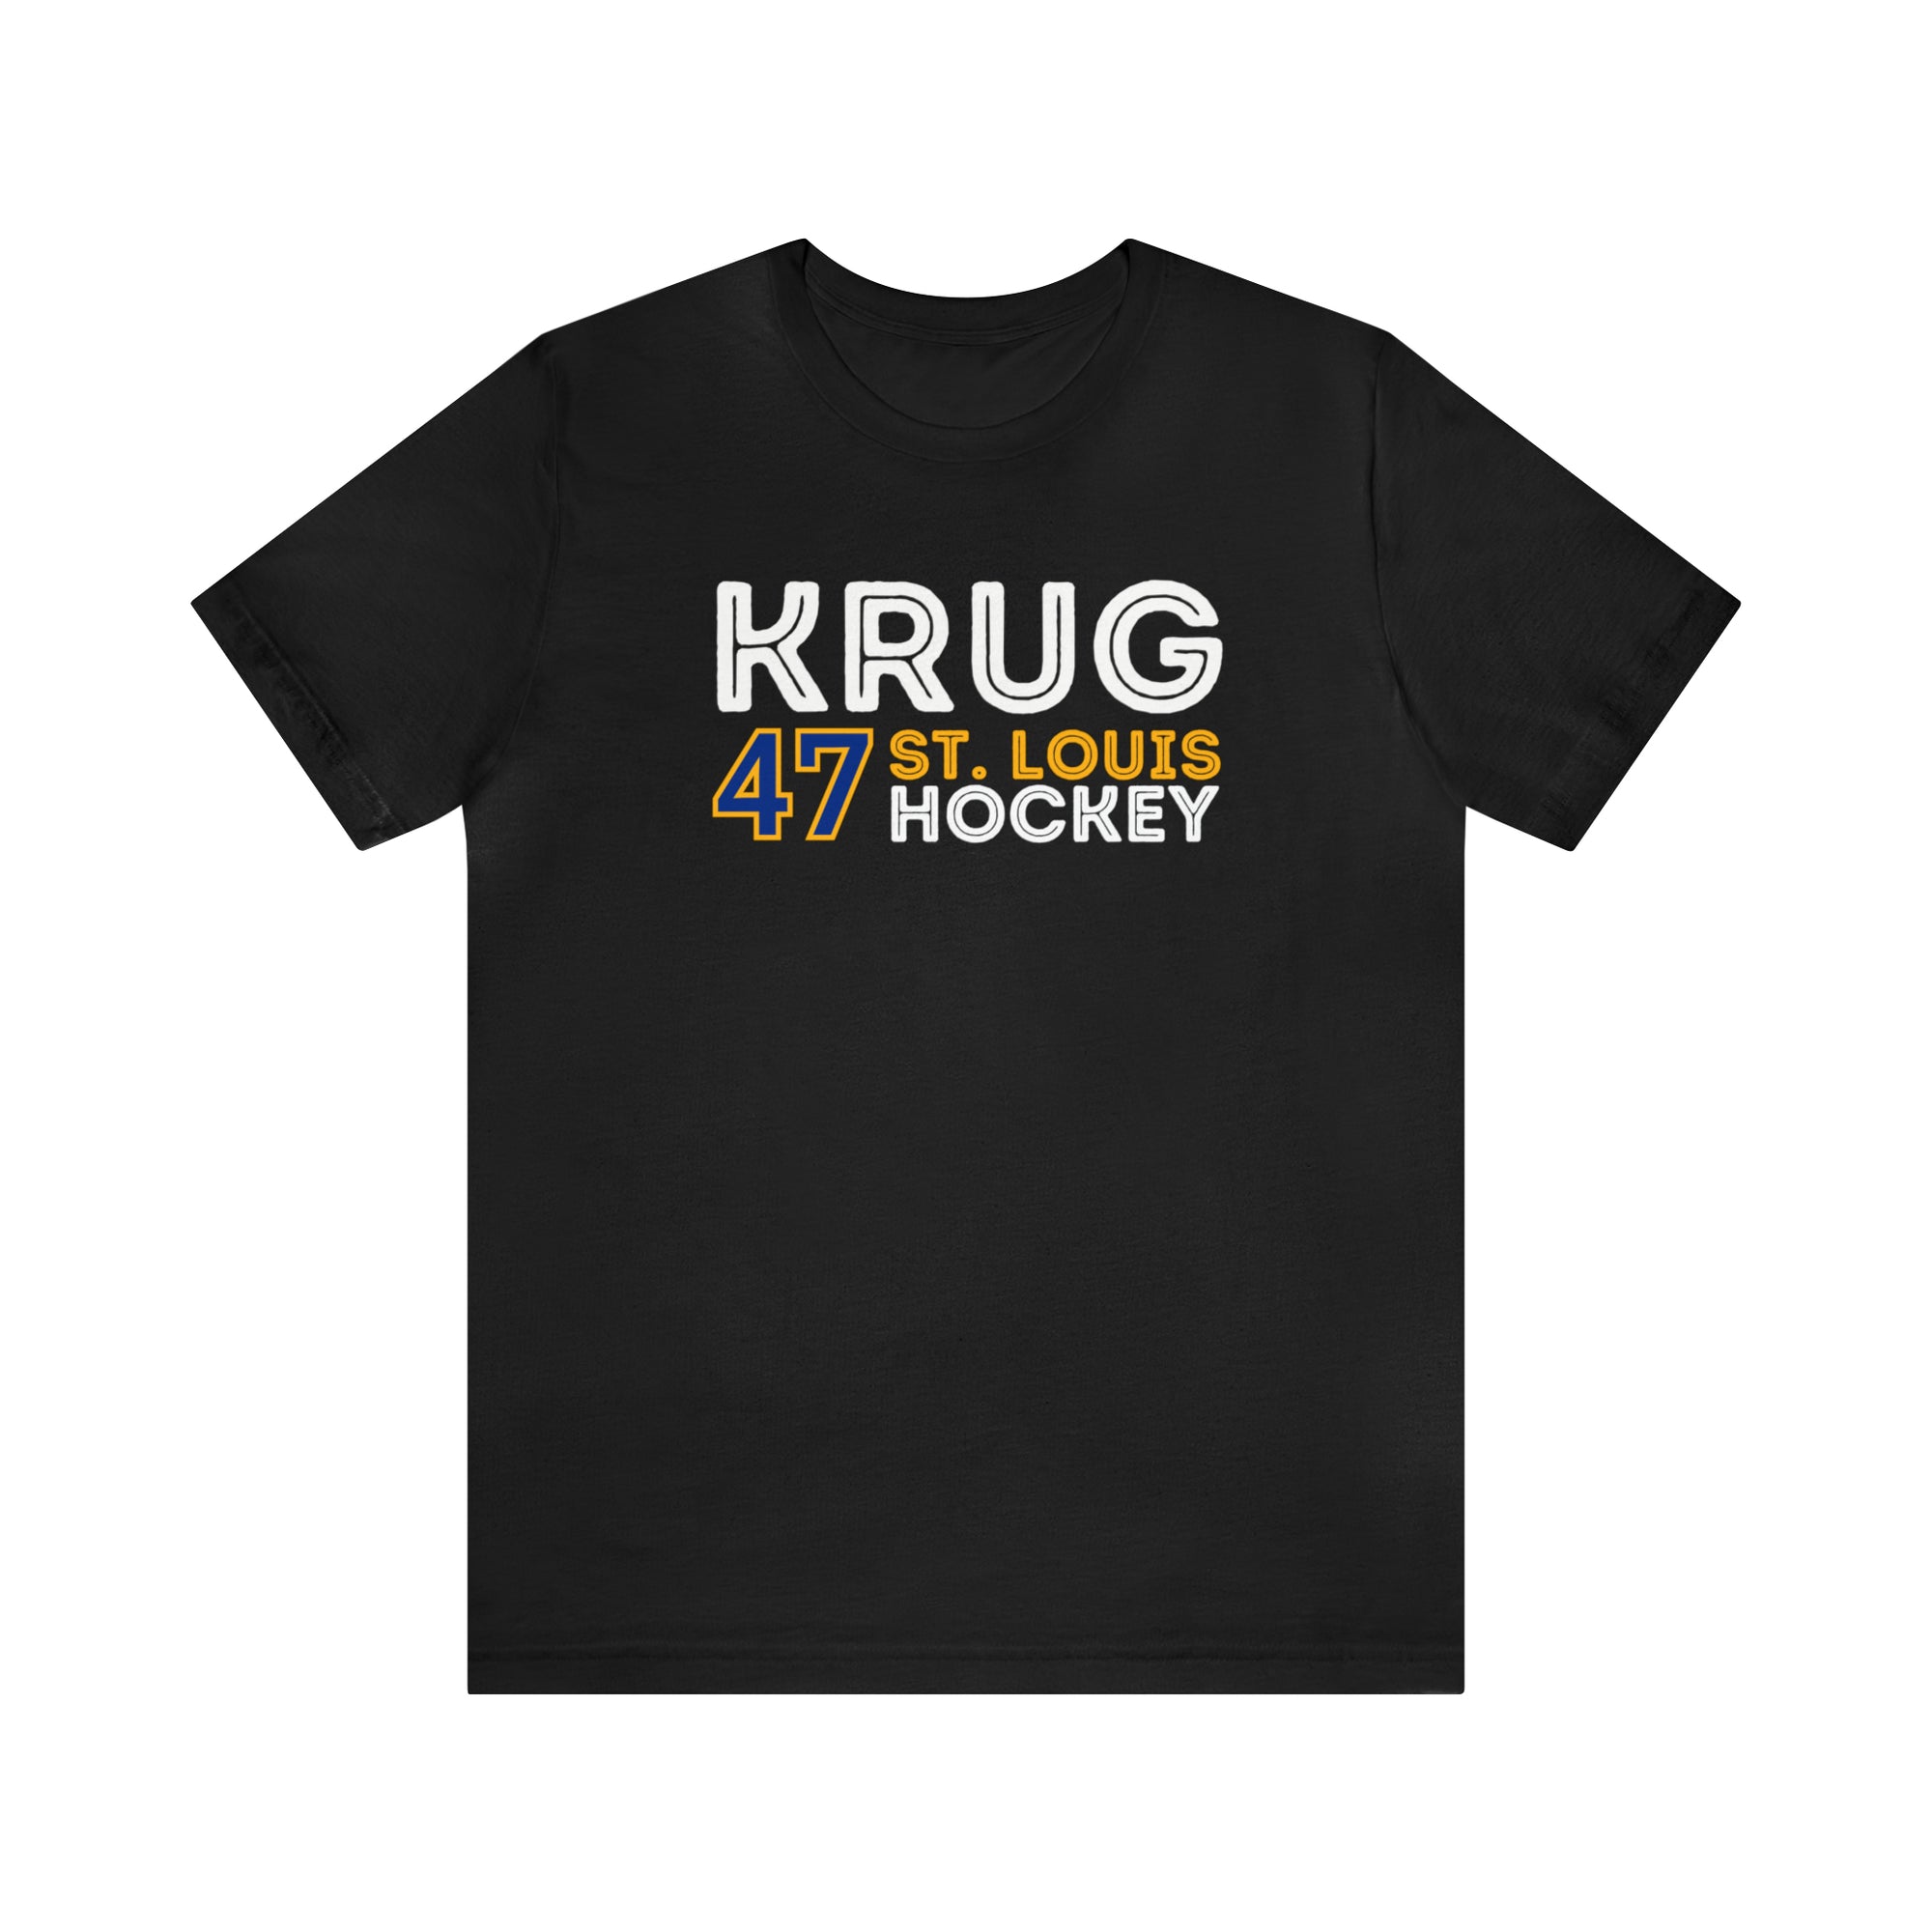 Krug 47 St. Louis Hockey Grafitti Wall Design Unisex T-Shirt